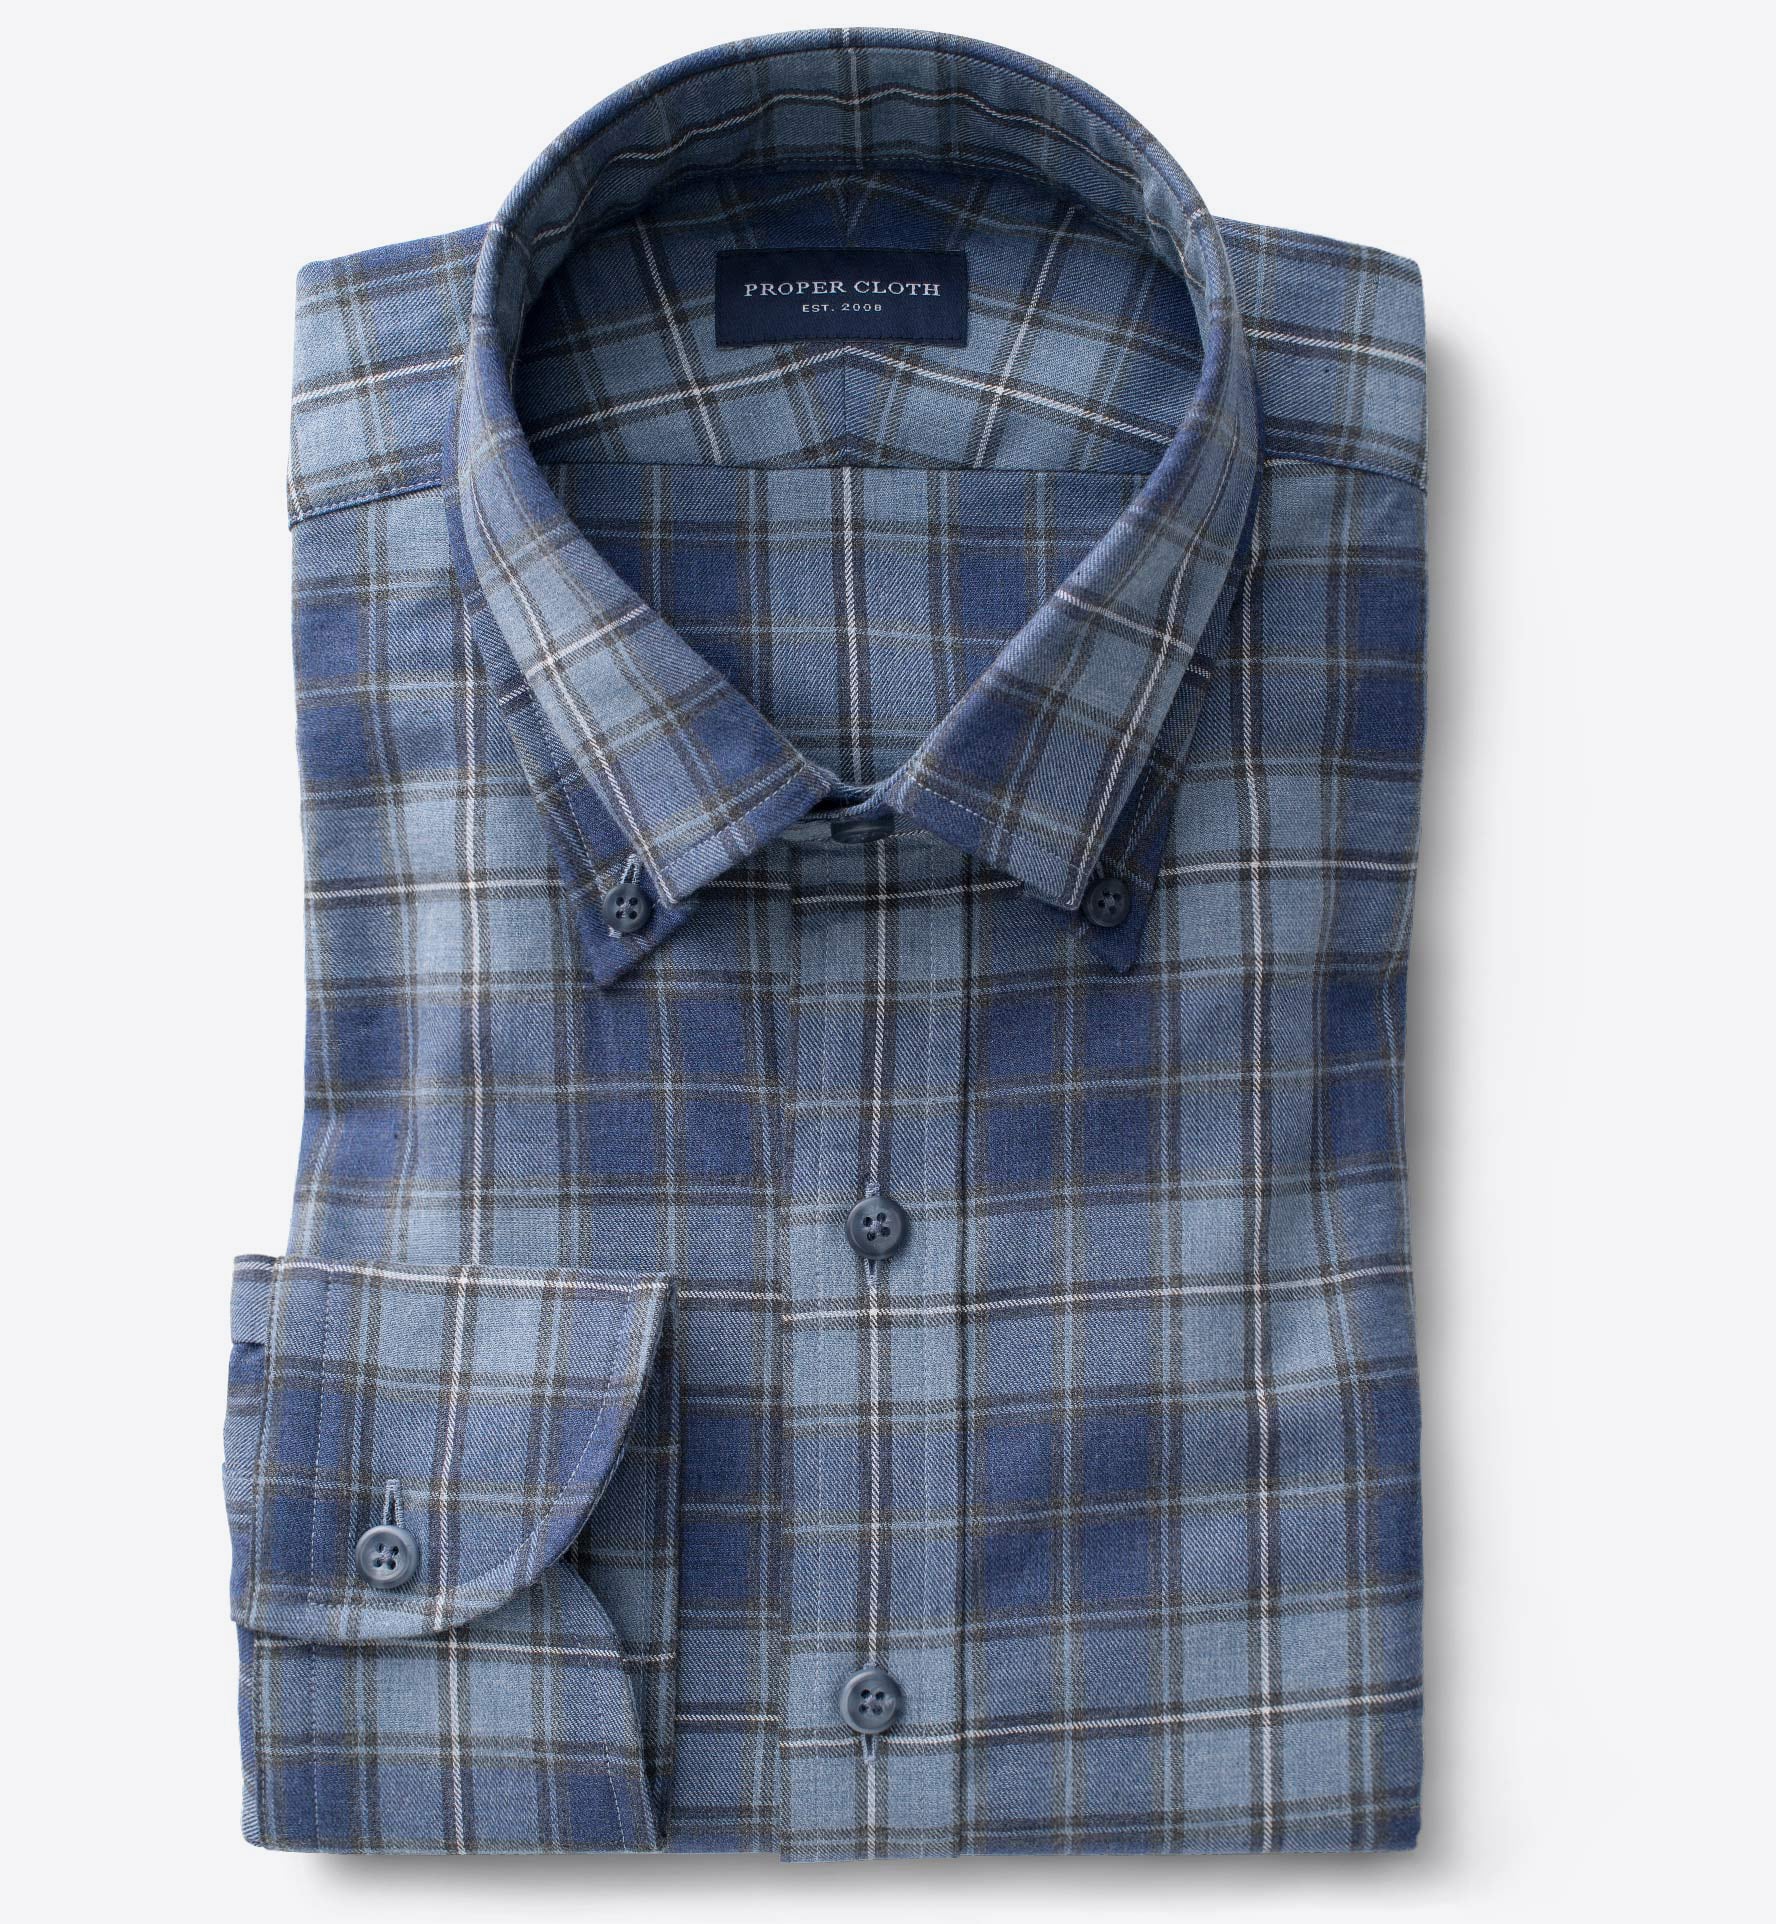 Blue and Grey Melange Plaid Men's Dress Shirt by Proper Cloth